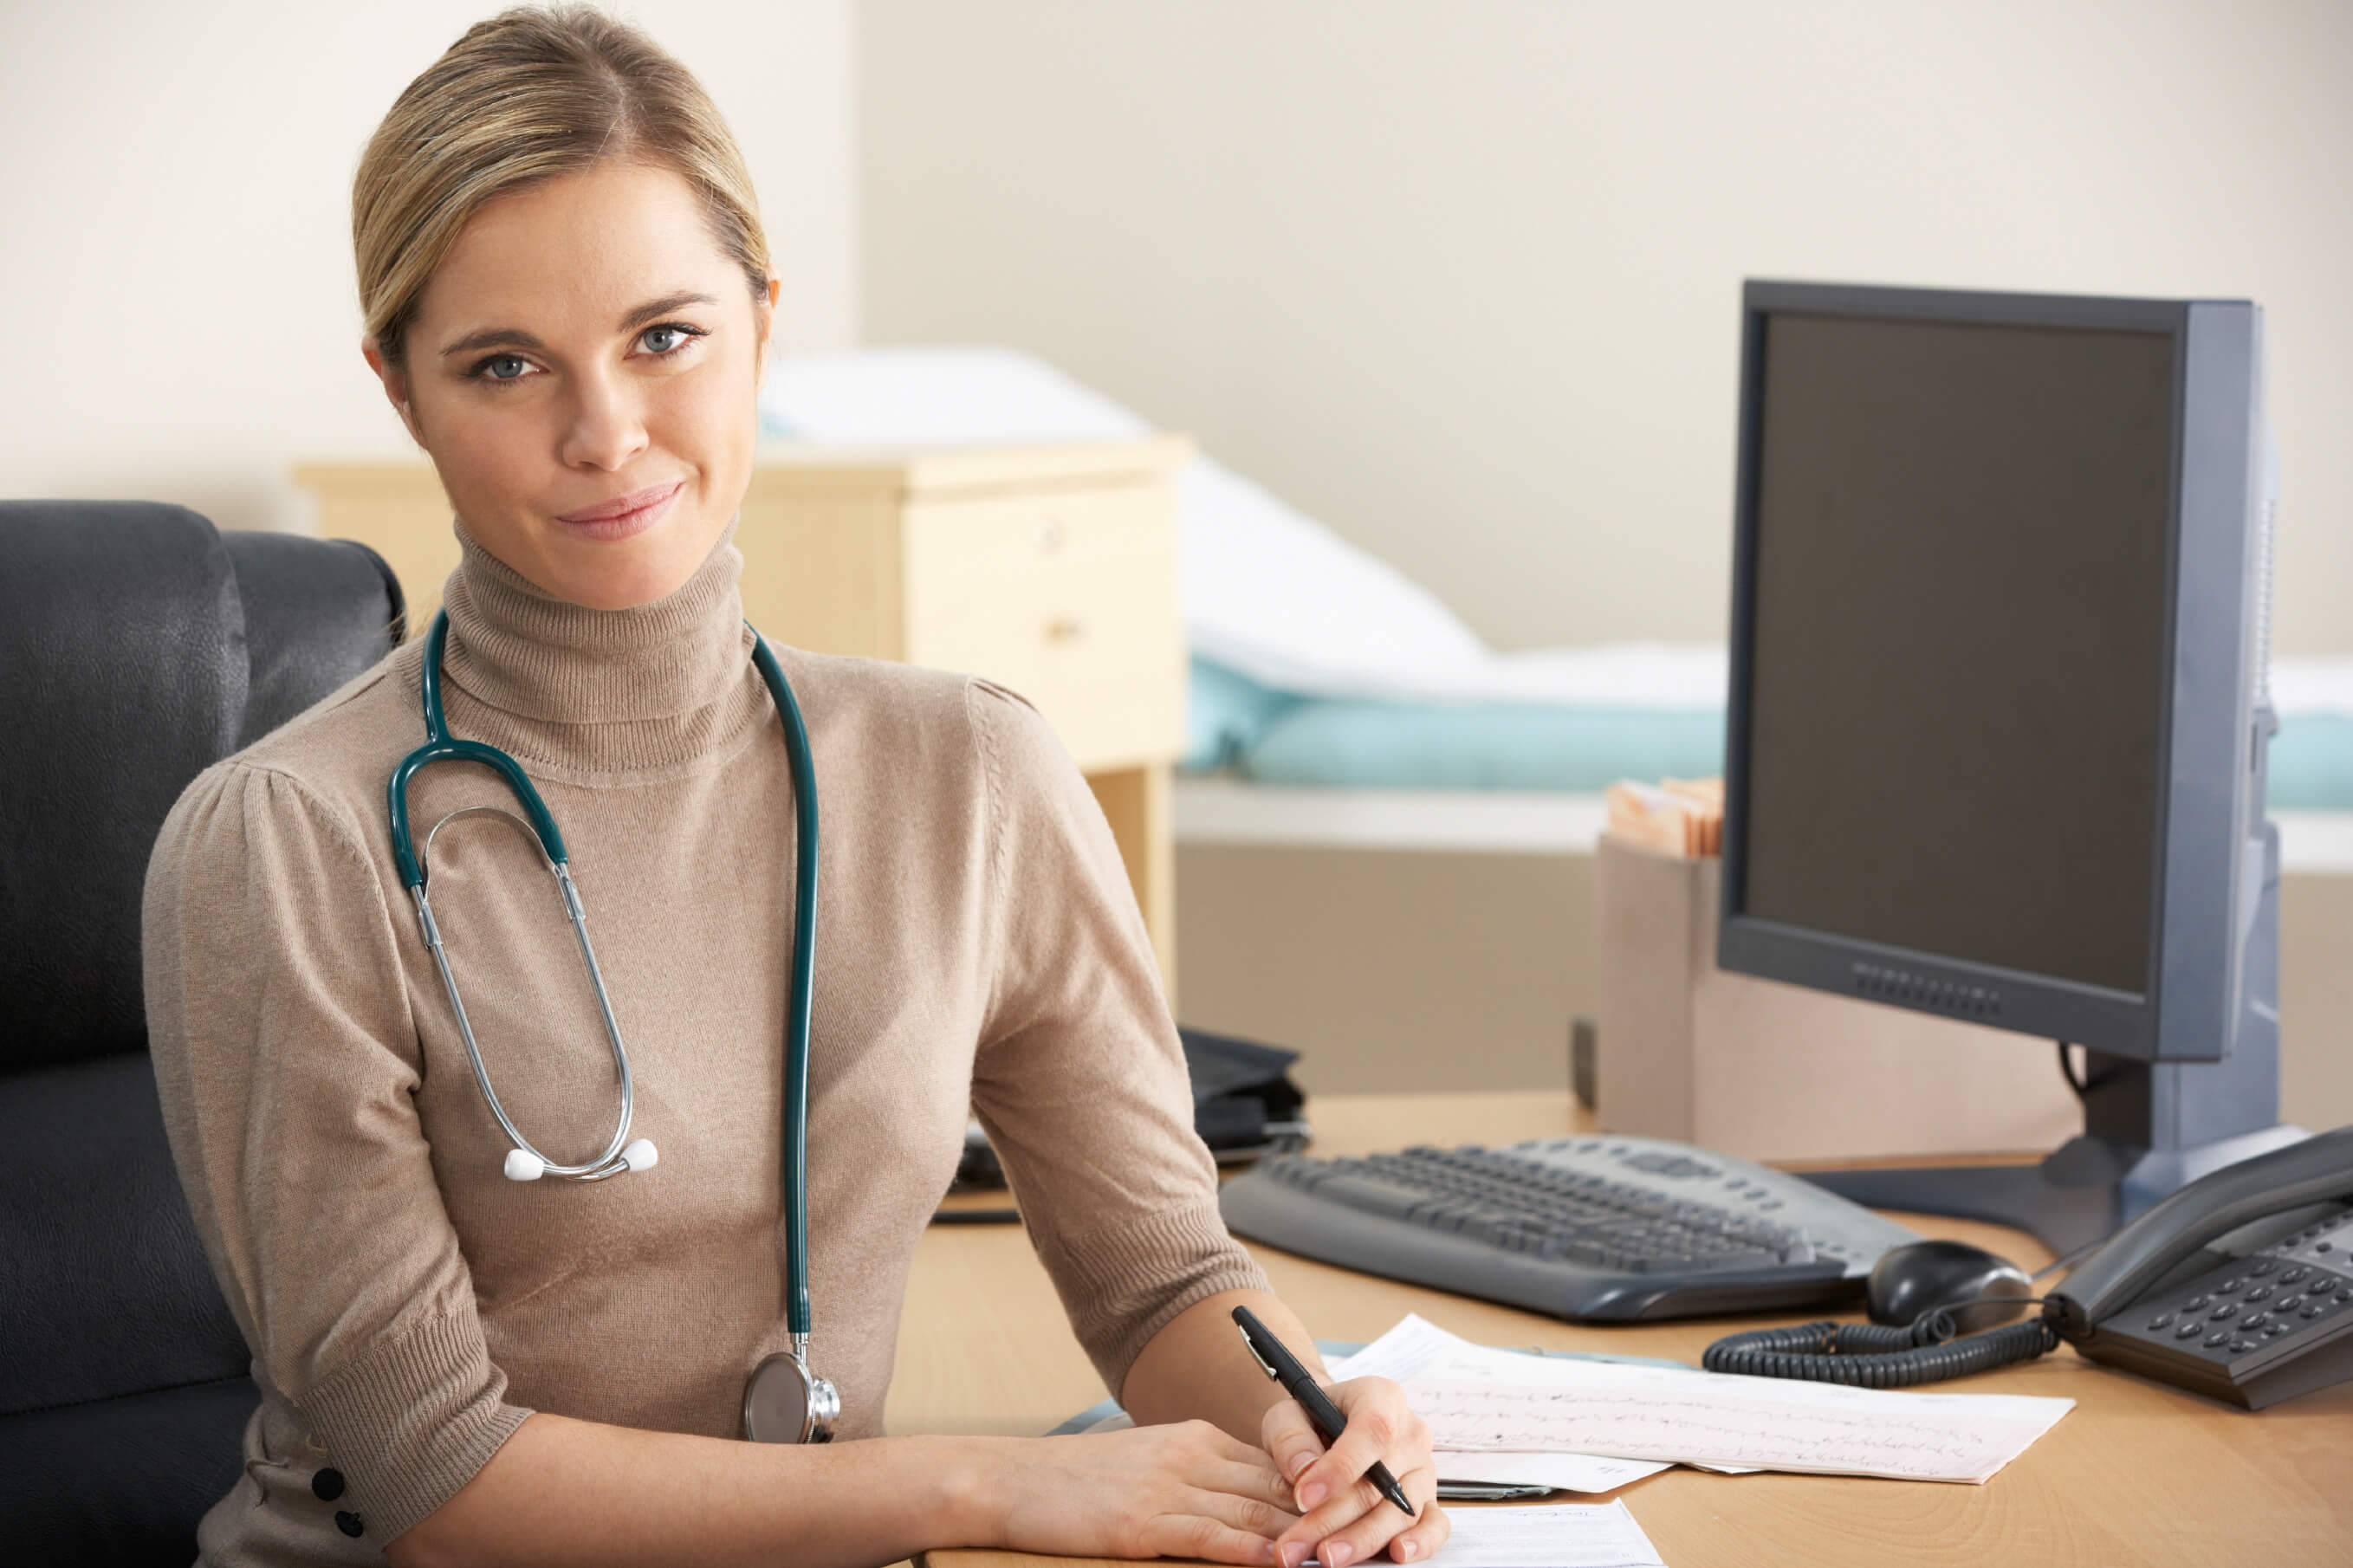 Female Doctor sitting at desk